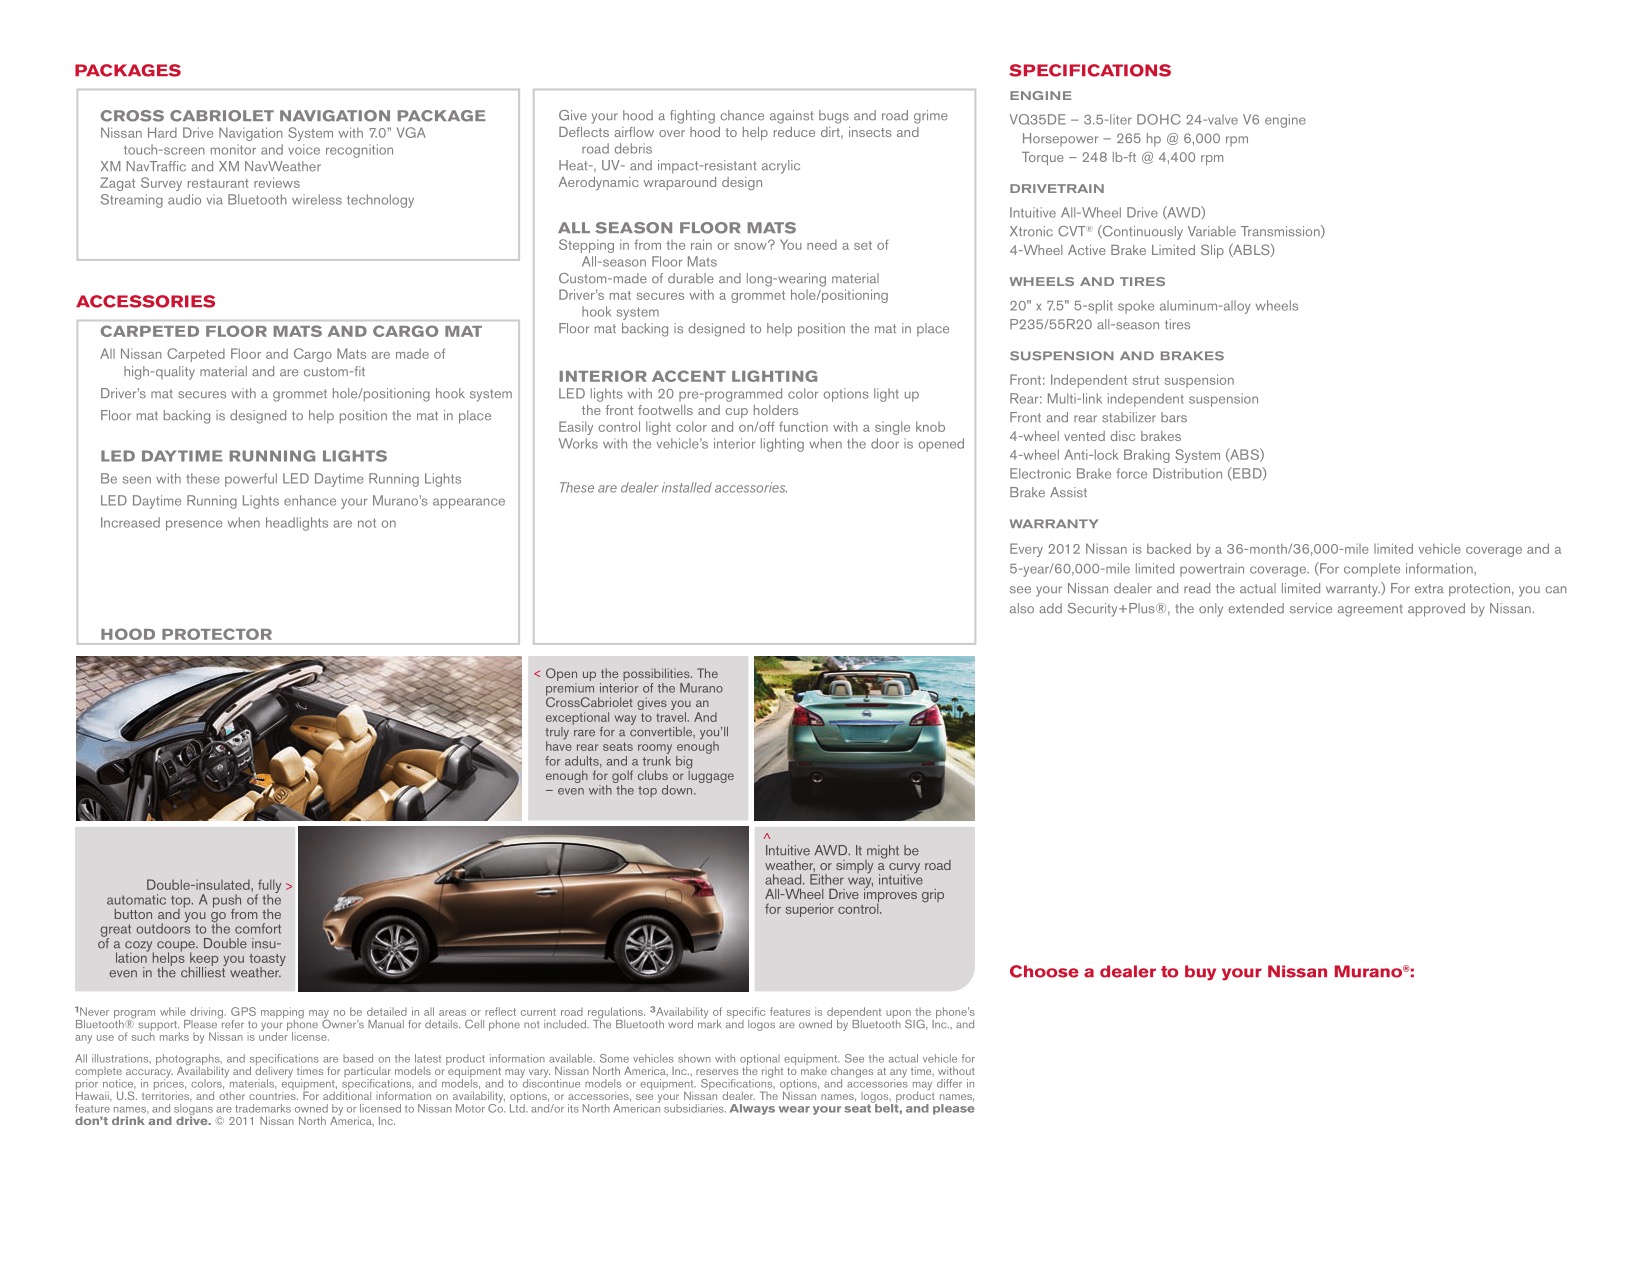 2012 Nissan Murano Brochure Page 5